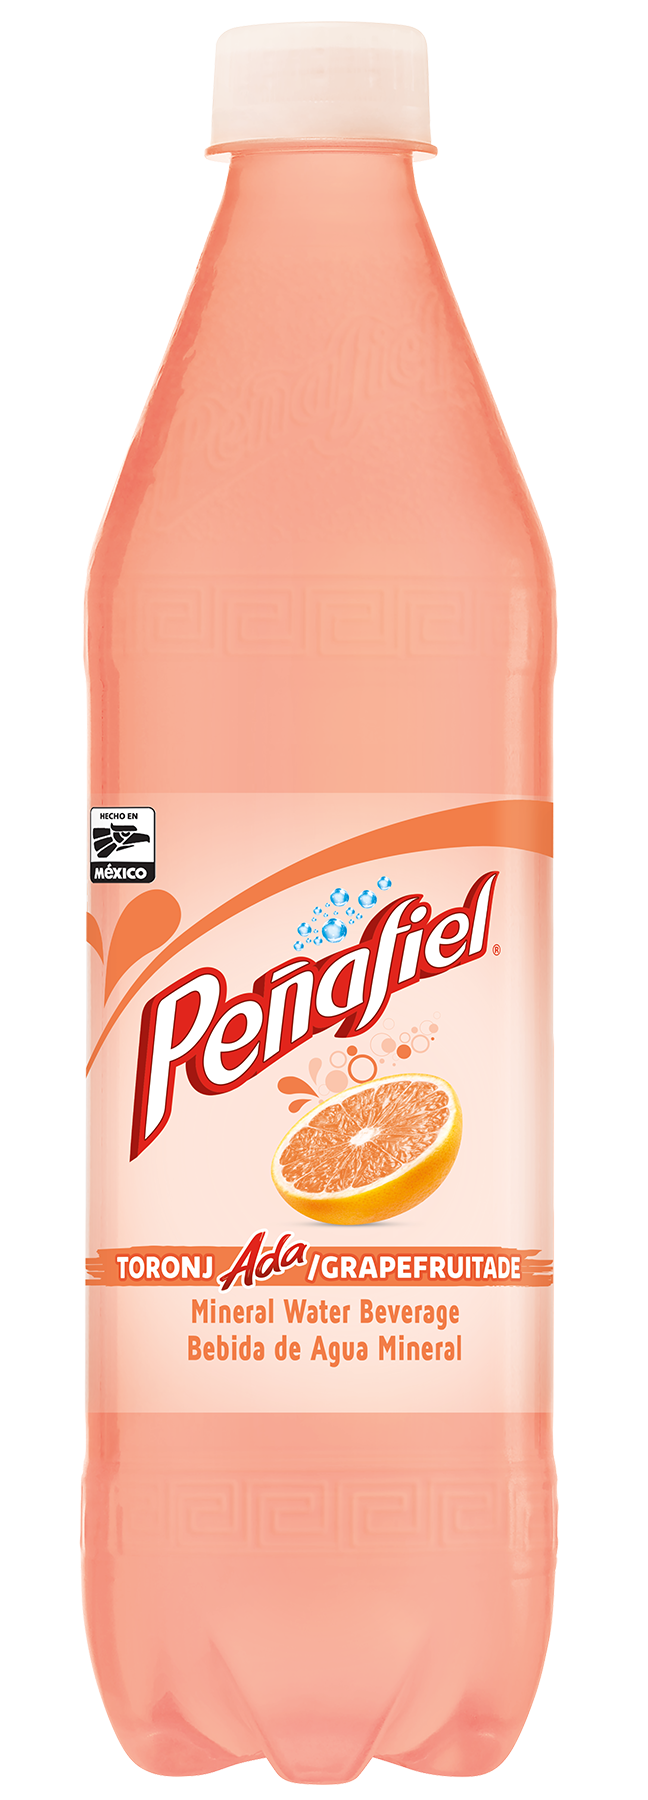 Peñafiel ToronjAda Grapefruitade bottle